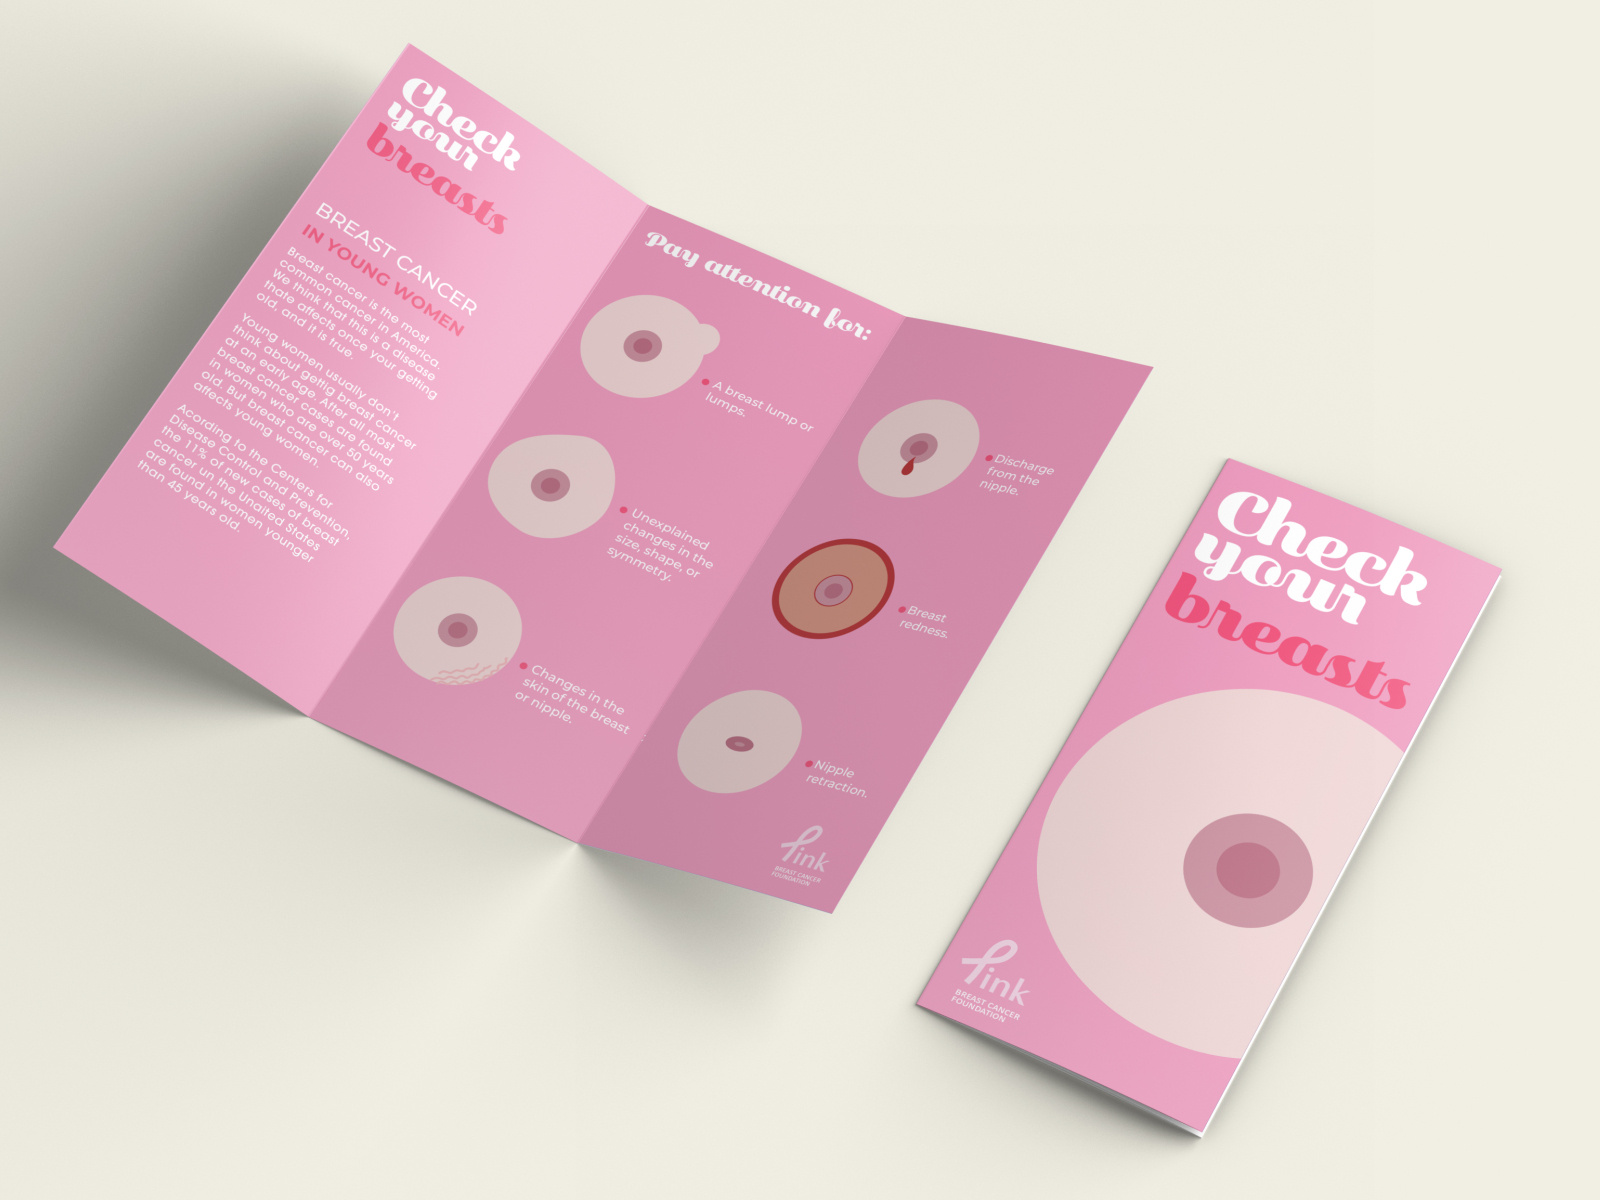 breast-cancer-brochure-by-miriam-volk-on-dribbble